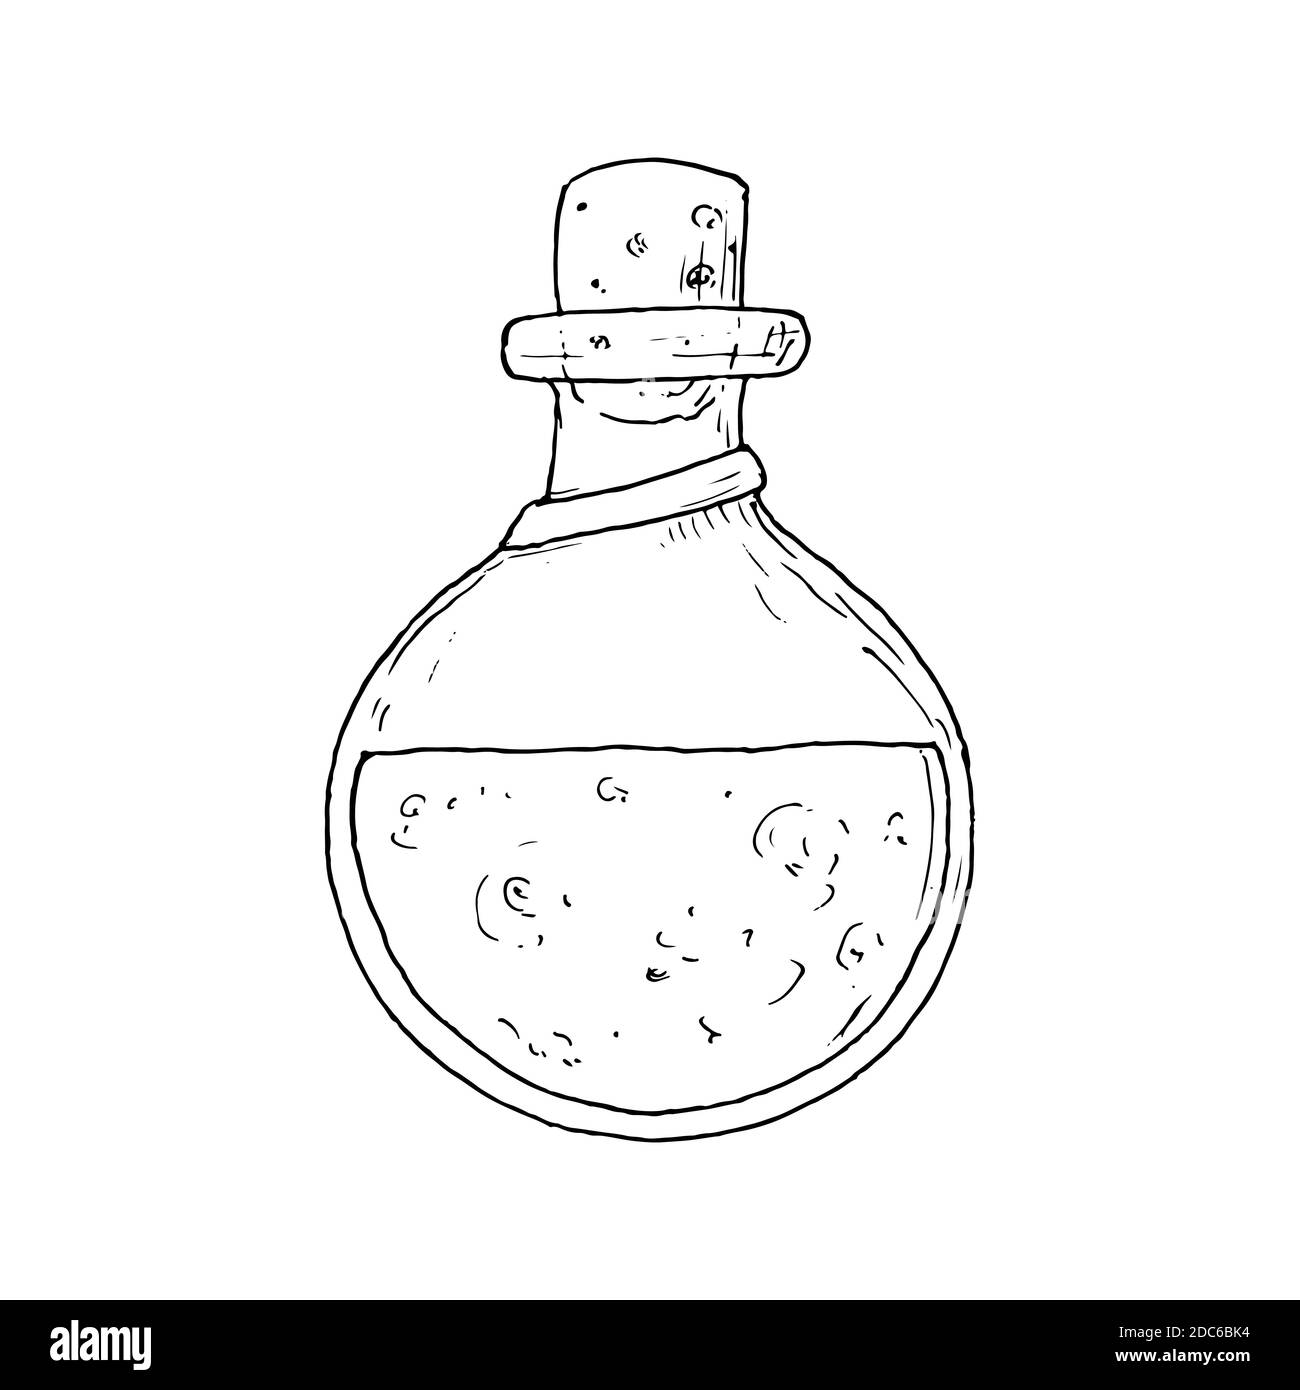 Potion Bottle Drawing Images  Free Download on Freepik